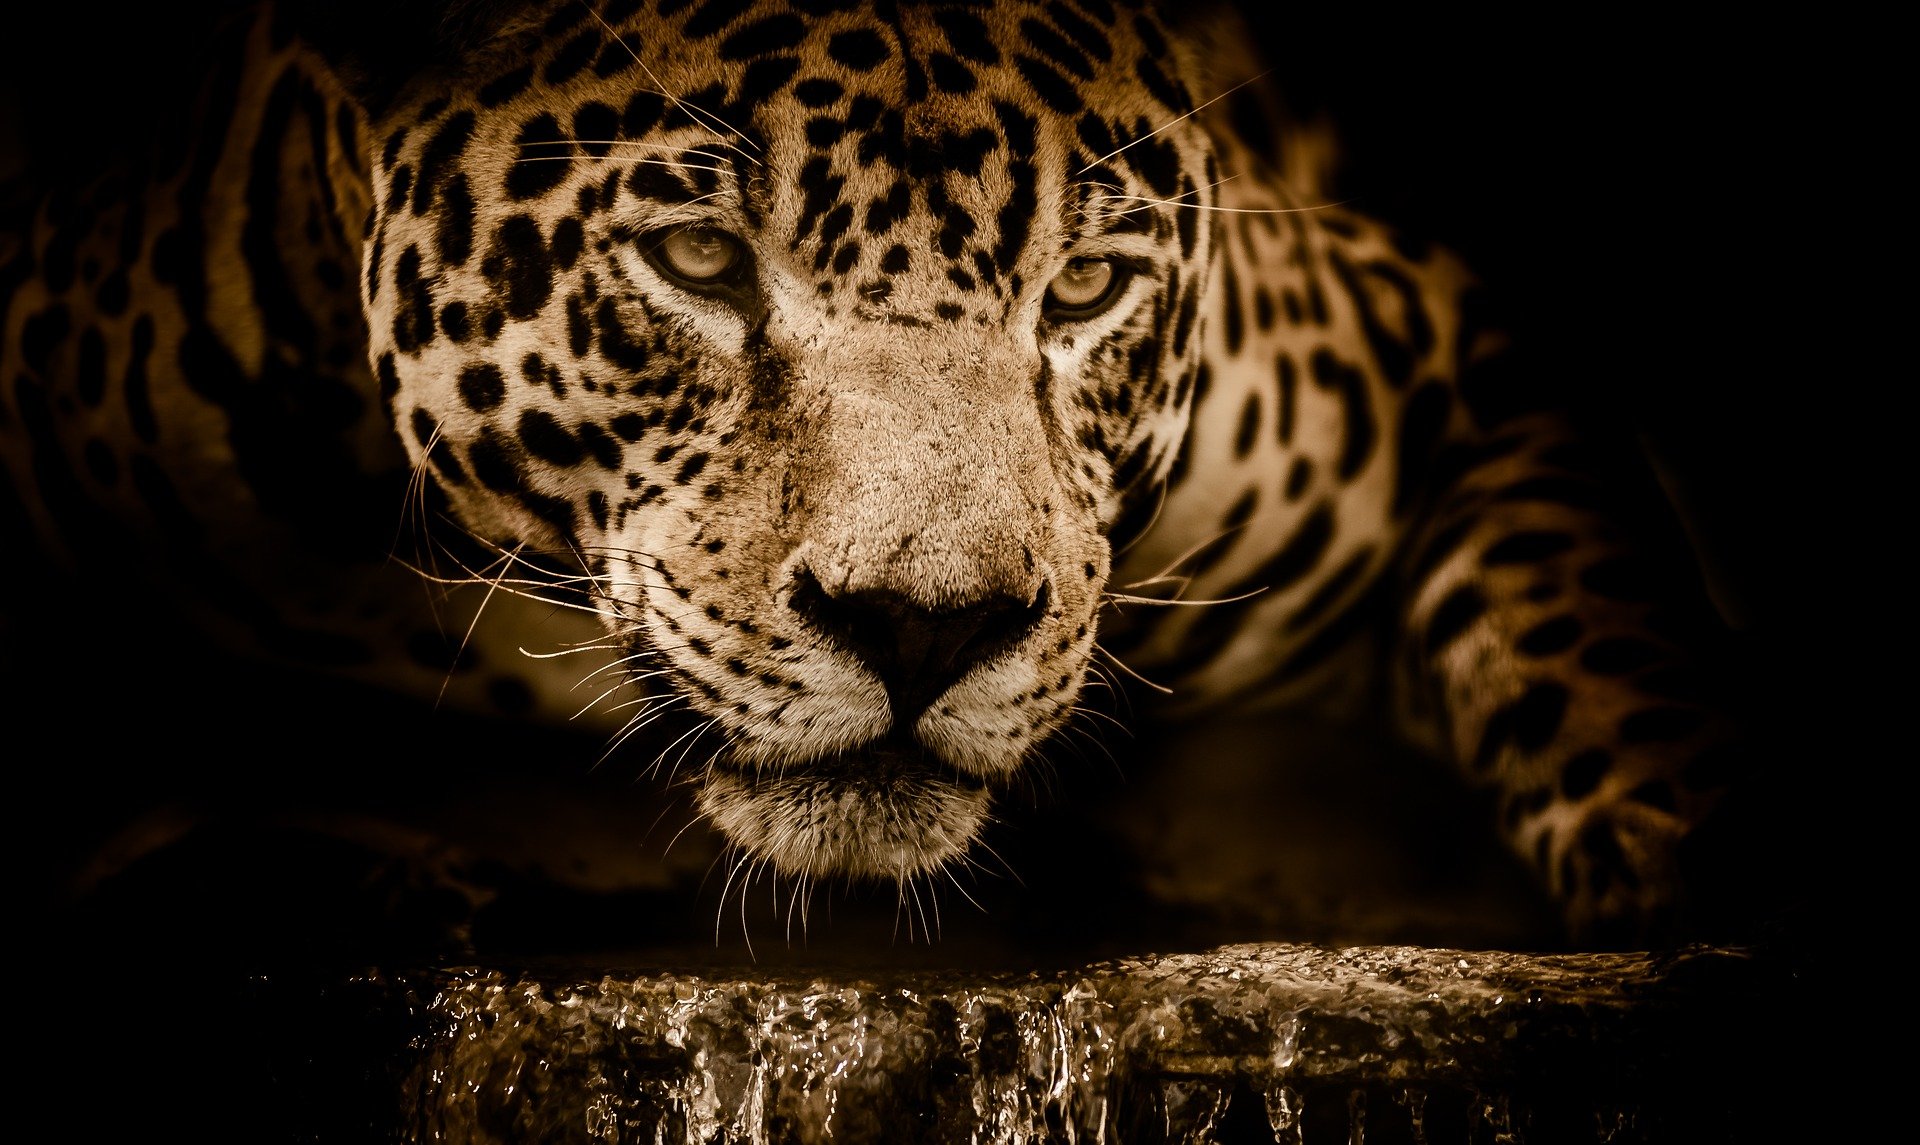 Jaguares atacan a flamencos dentro del Parque de las Aves en Brasil. (Foto Prensa Libre: Pixabay)